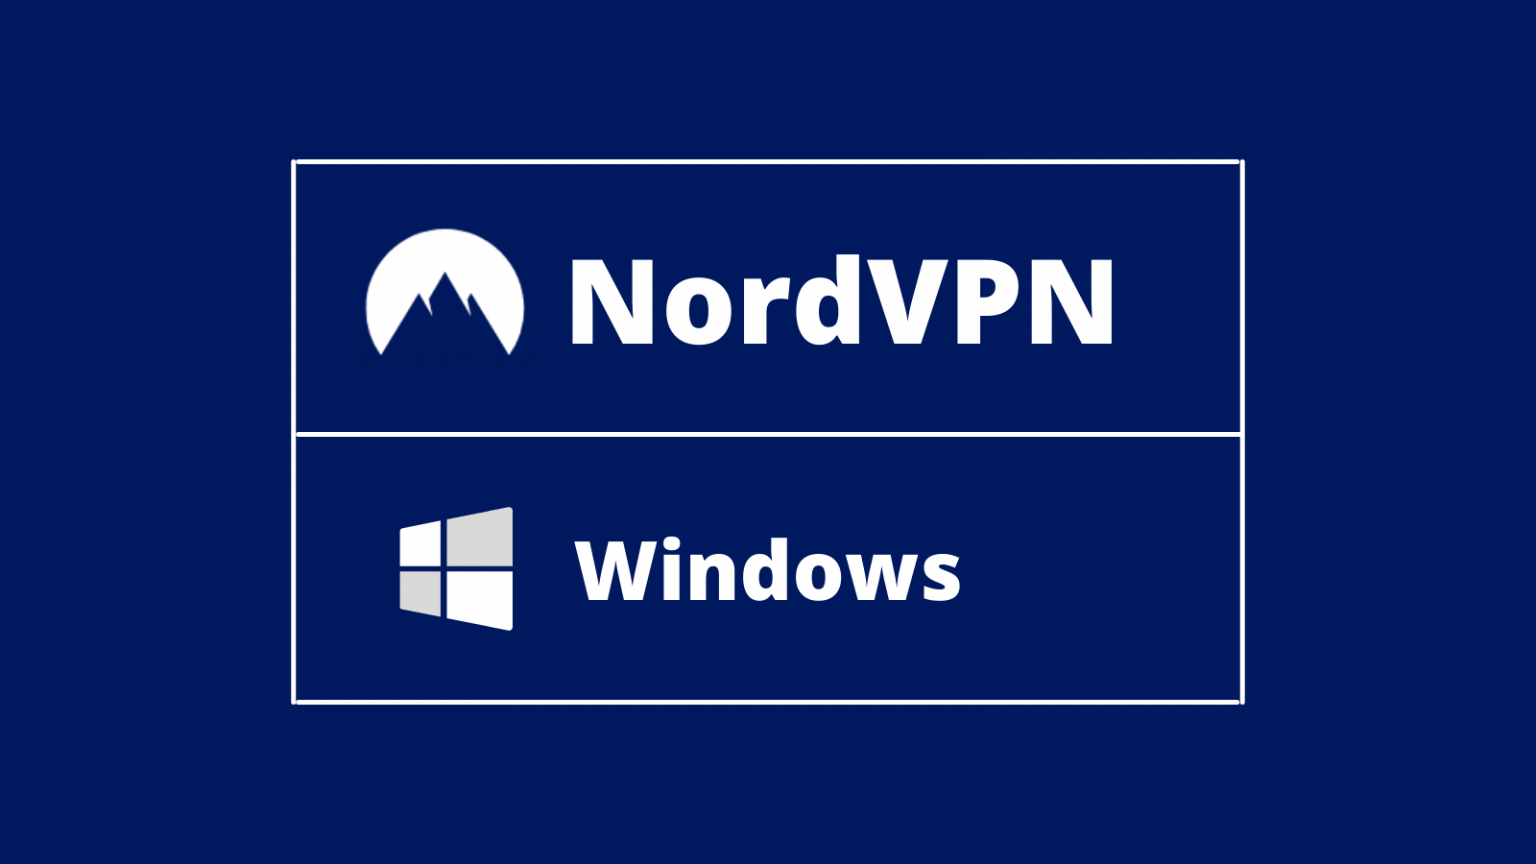 nordvpn for windows 10 download